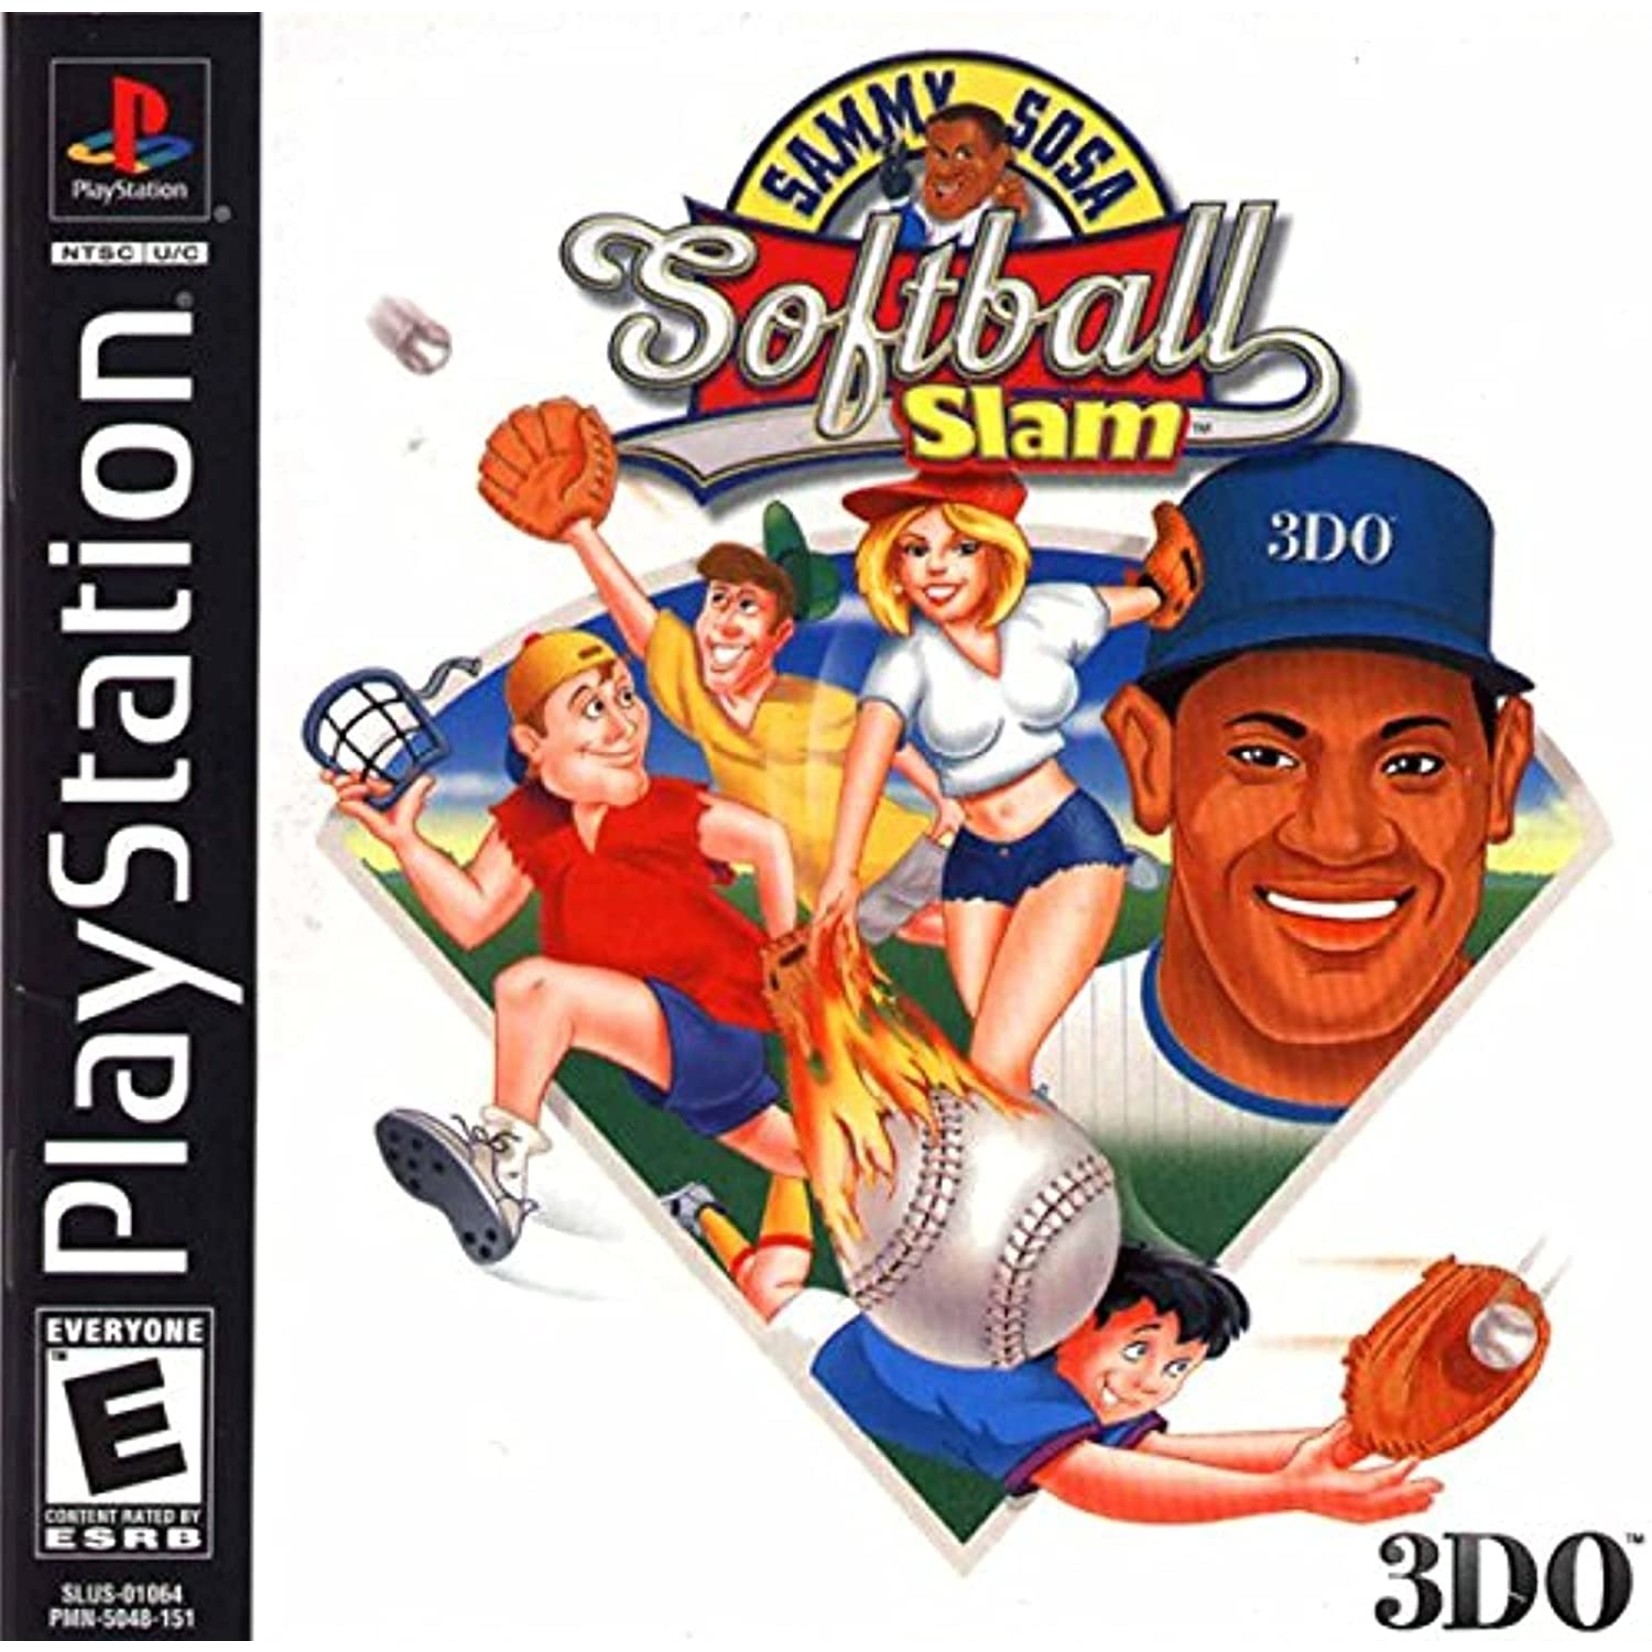 PS1U-Sammy Sosa Softball Slam